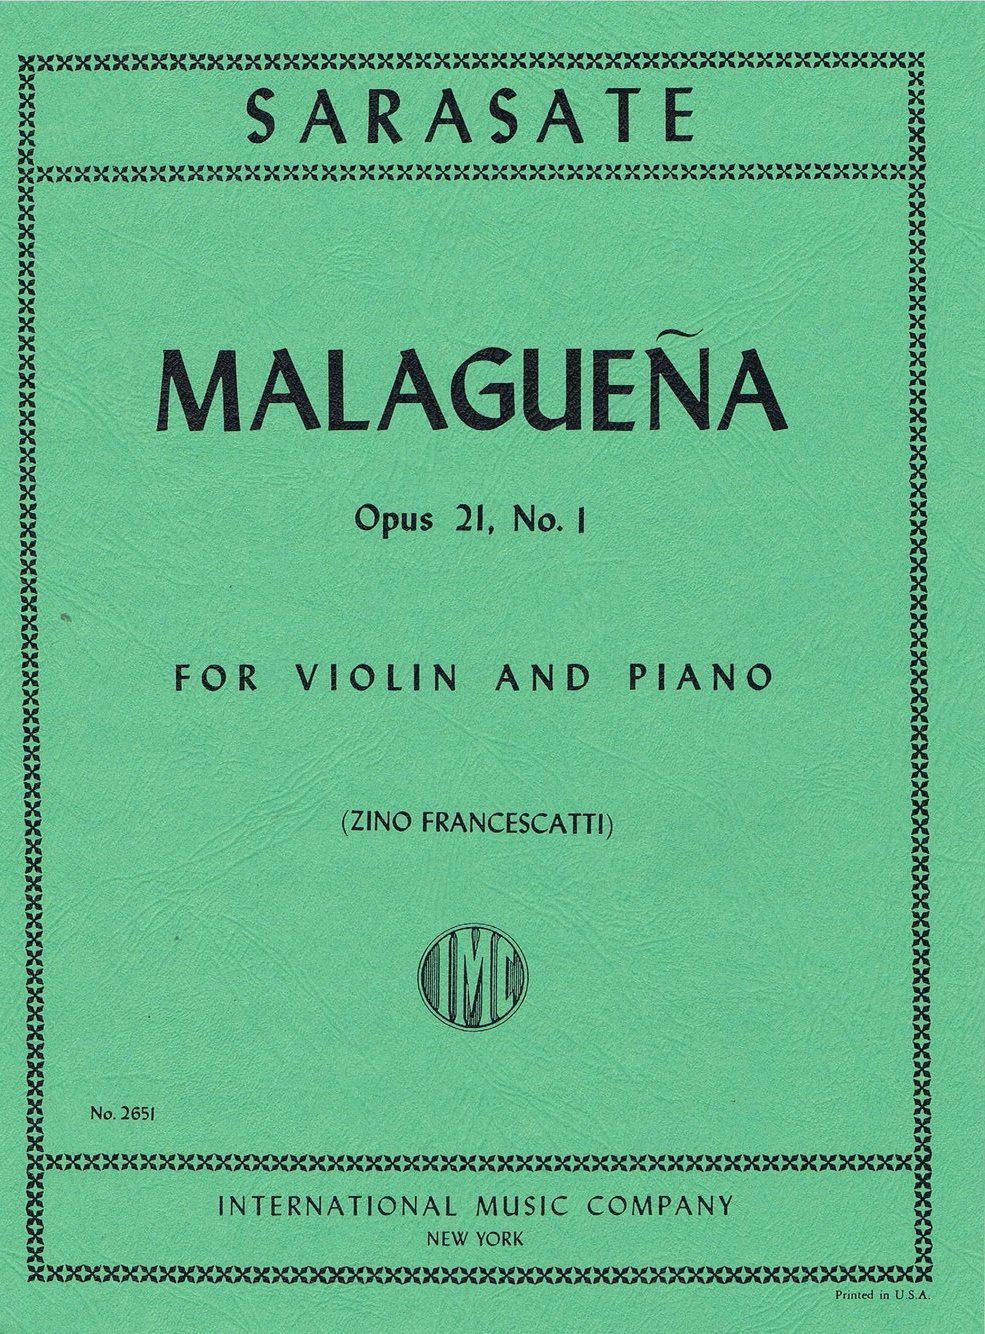 IMC Malaguena Op. 21 No. 1 for Violin and Piano - Sarasate No. 2651